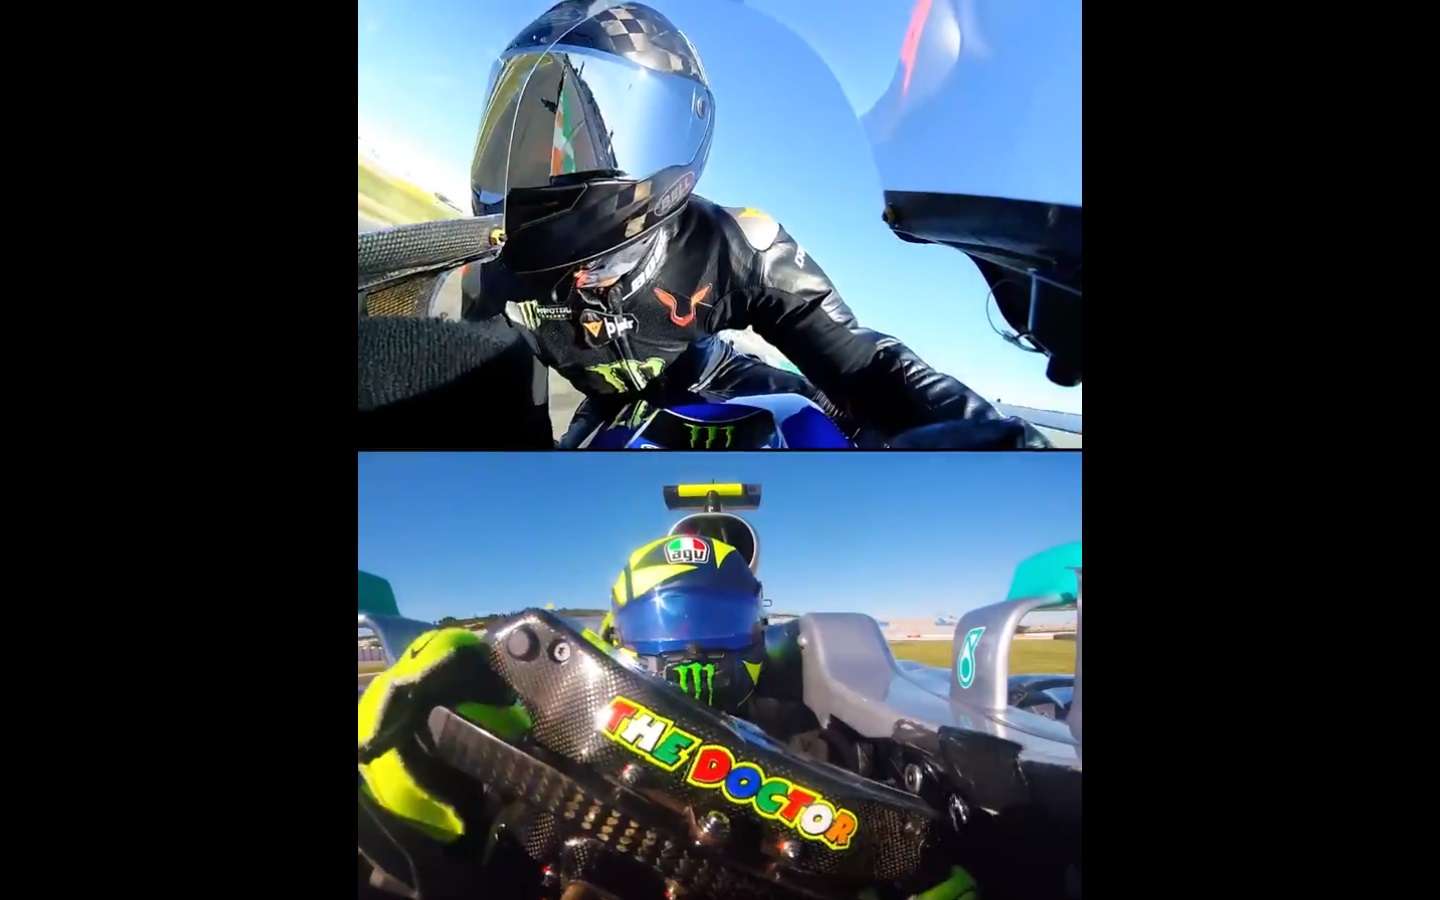 Tangkapan Layar dari video unggahan Monster yang menunjukkan Valentino Rossi dan Lewis Hamilton bertukar tunggangan.